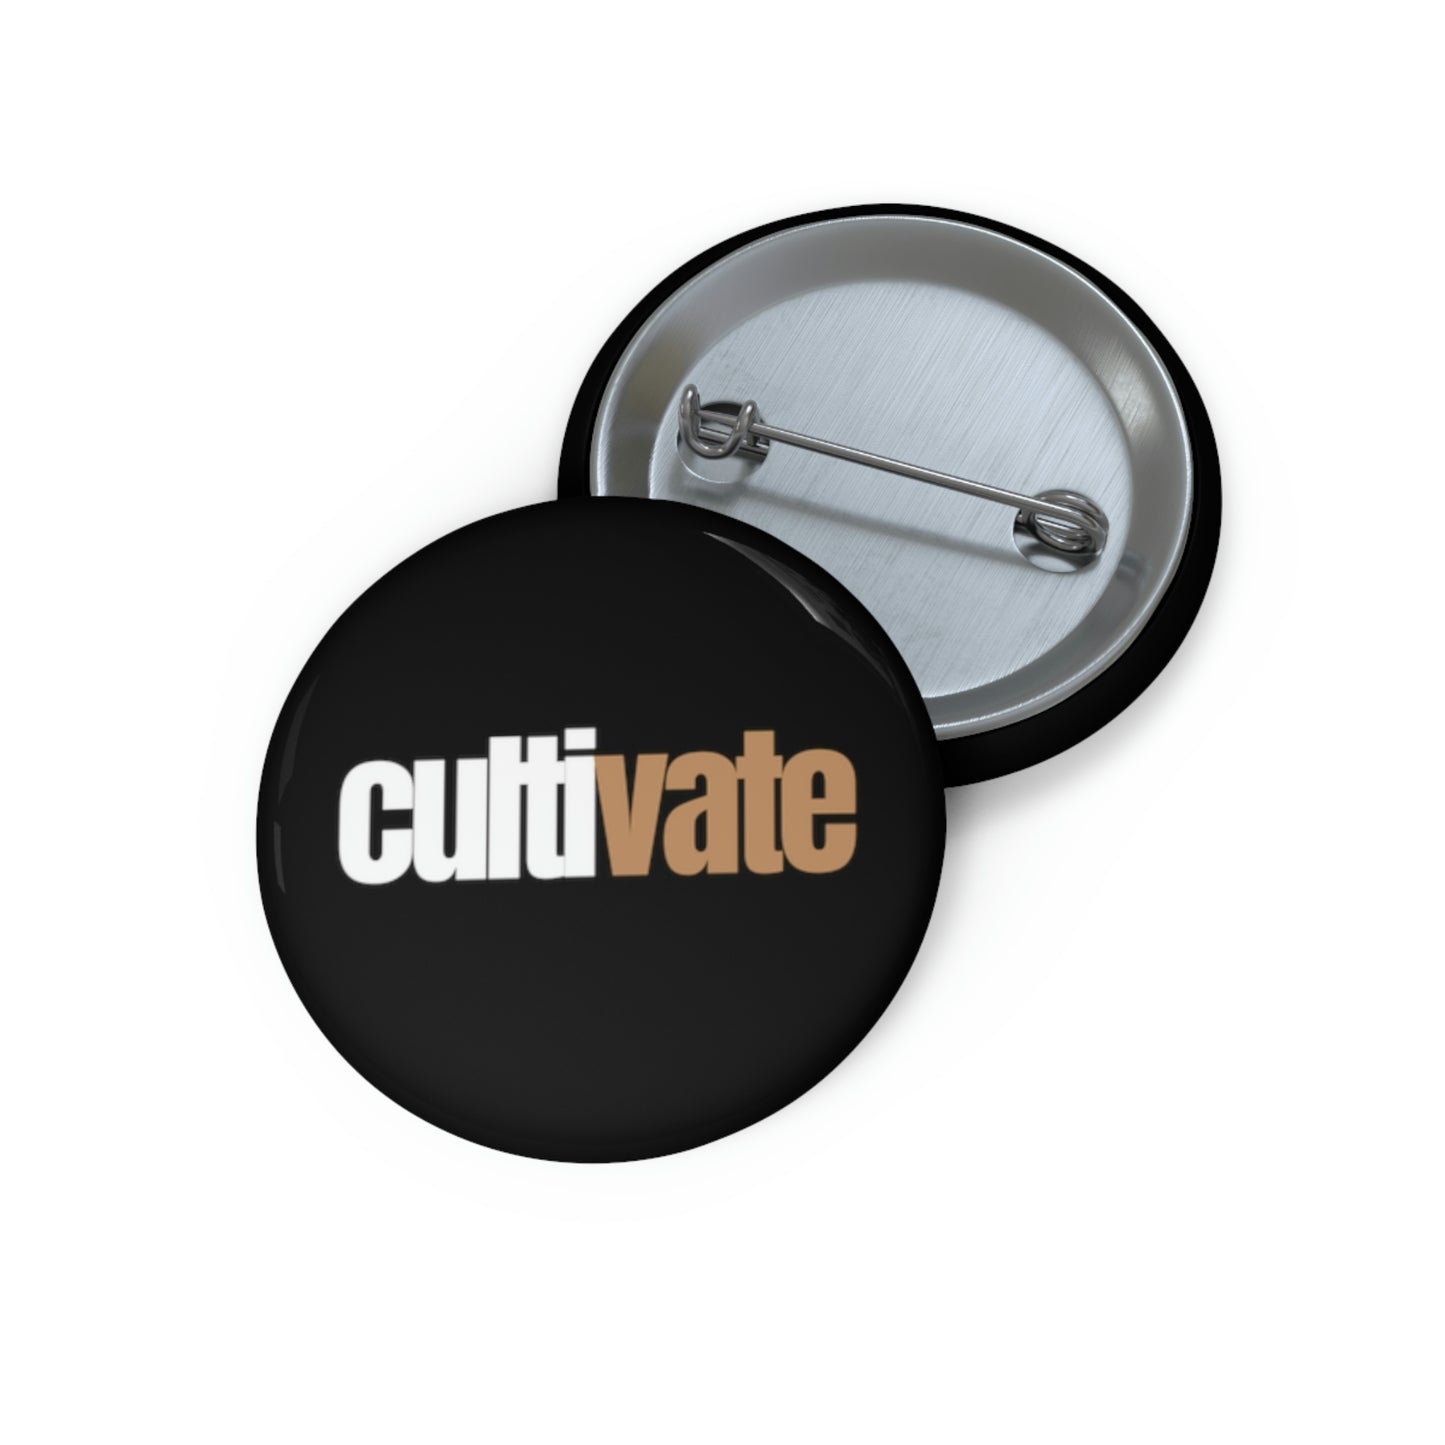 "cultivate" Pin Button - white & gold